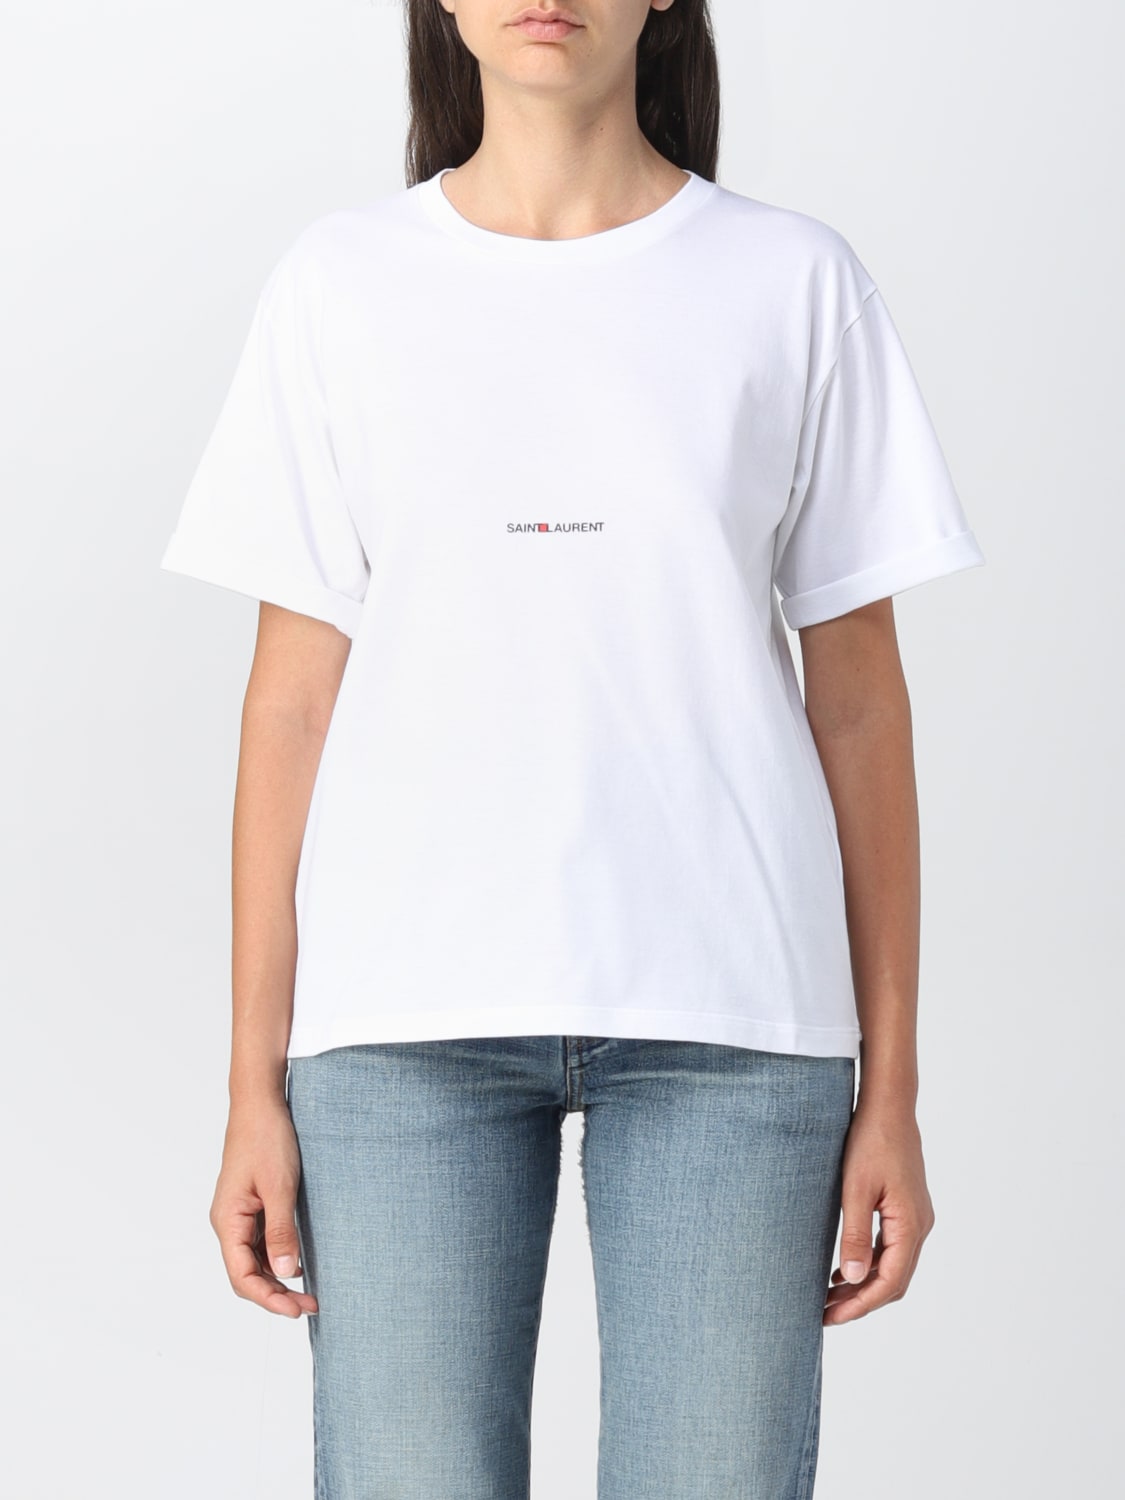 Saint Laurent(サンローラン) ロゴTシャツ